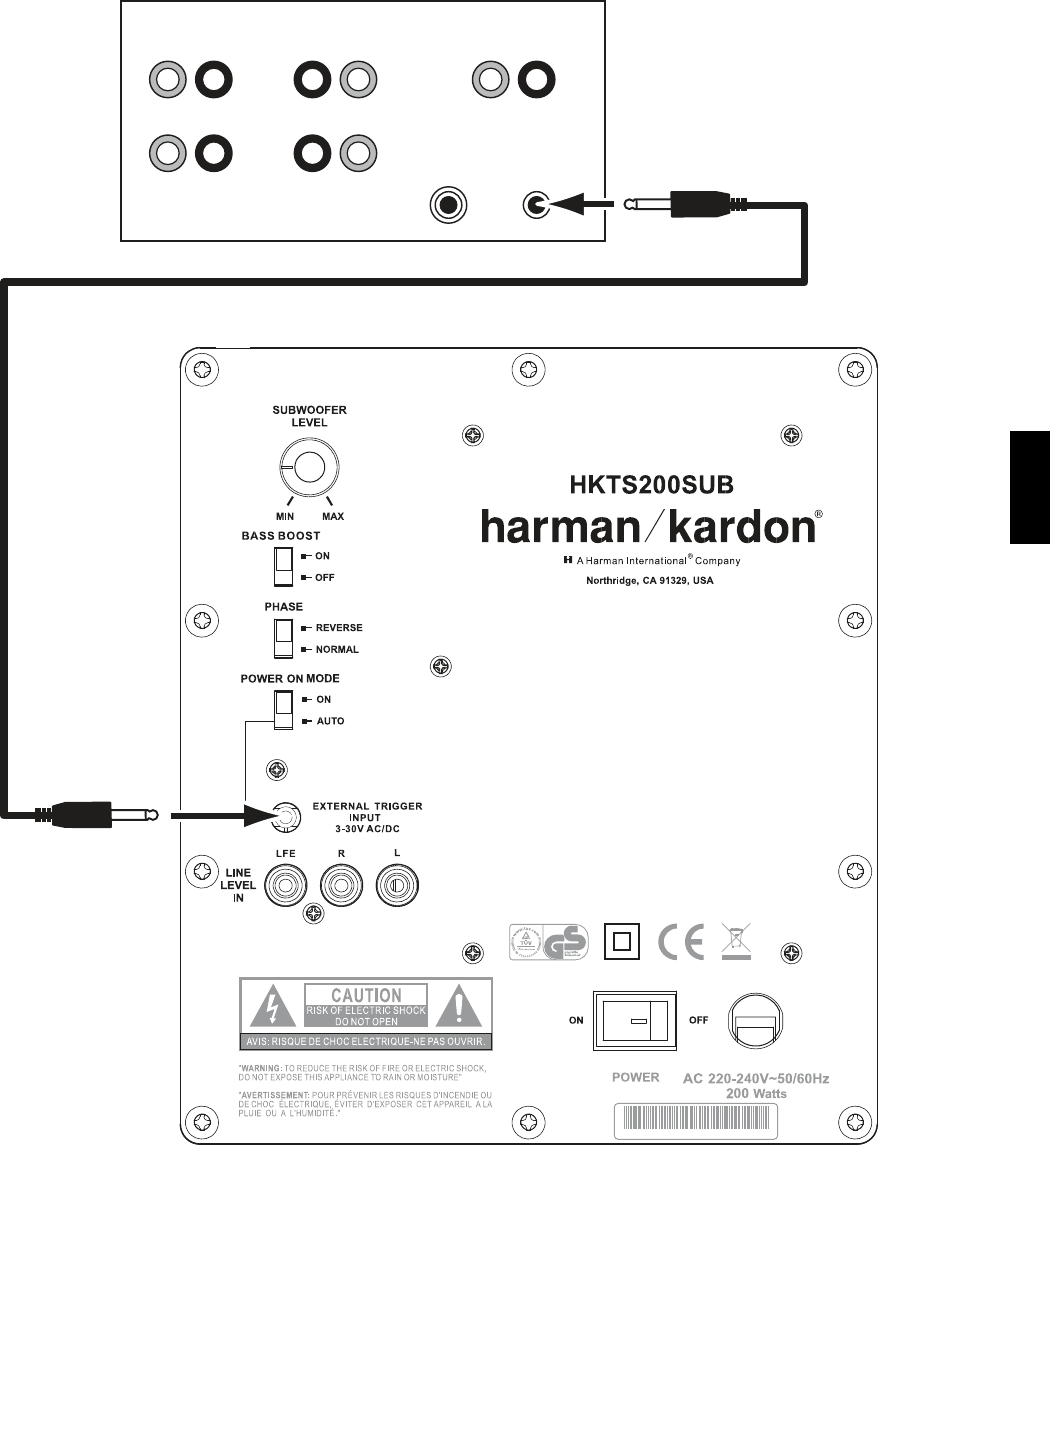 Telegraaf dichters BES Handleiding Harman Kardon HKTS 9 (pagina 9 van 12) (Nederlands)